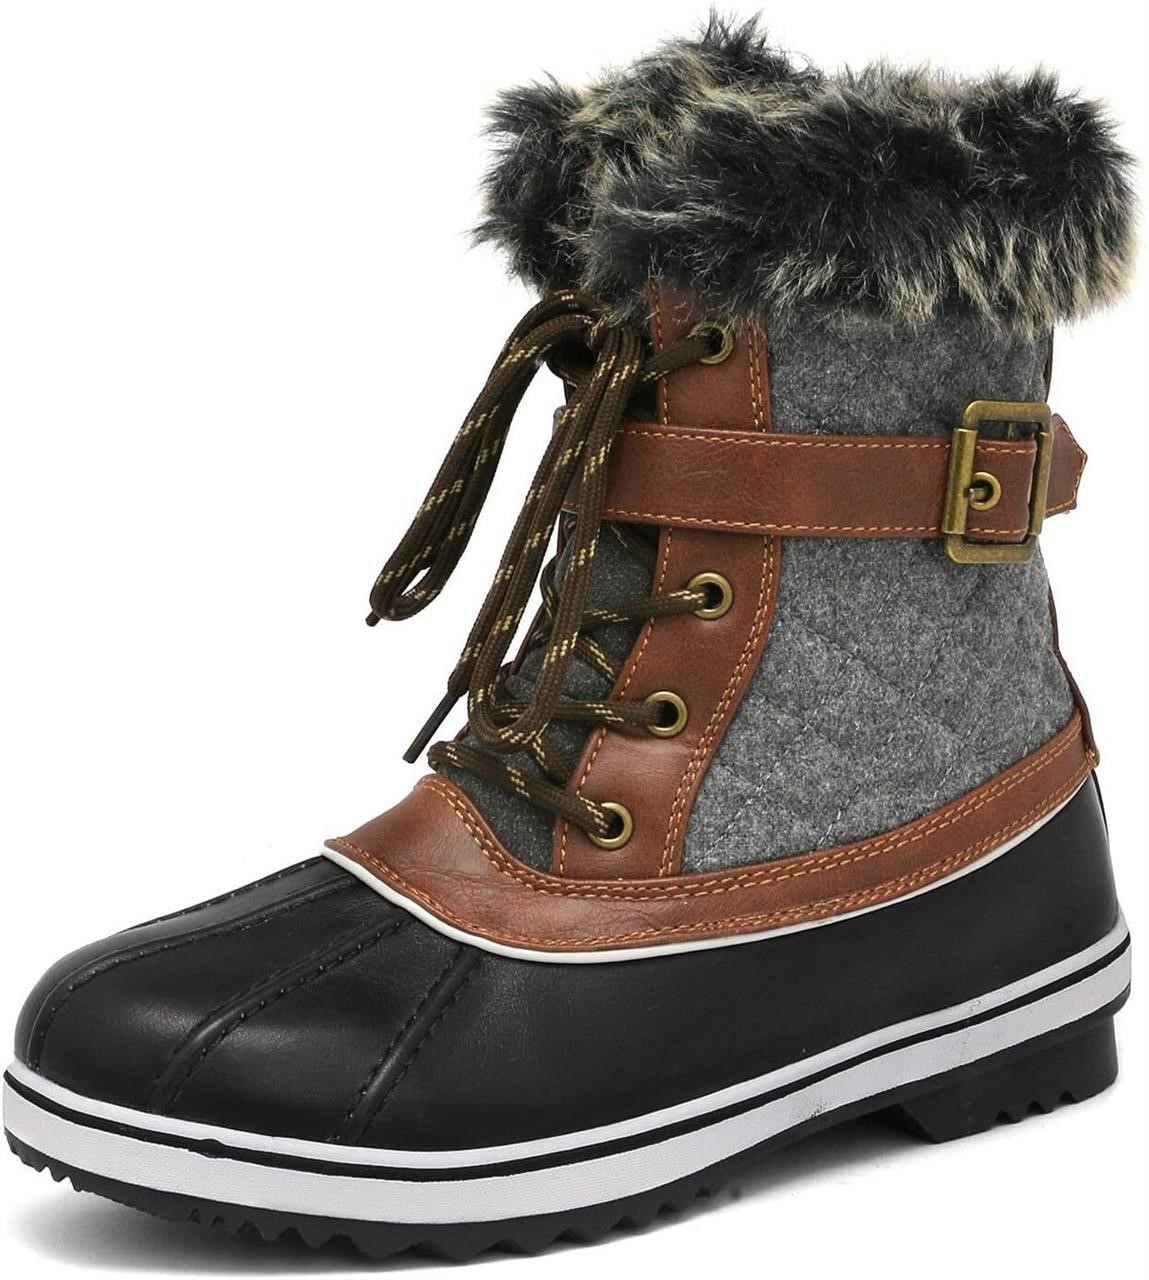 DREAM PAIRS Waterproof Snow Boots 12 3-black